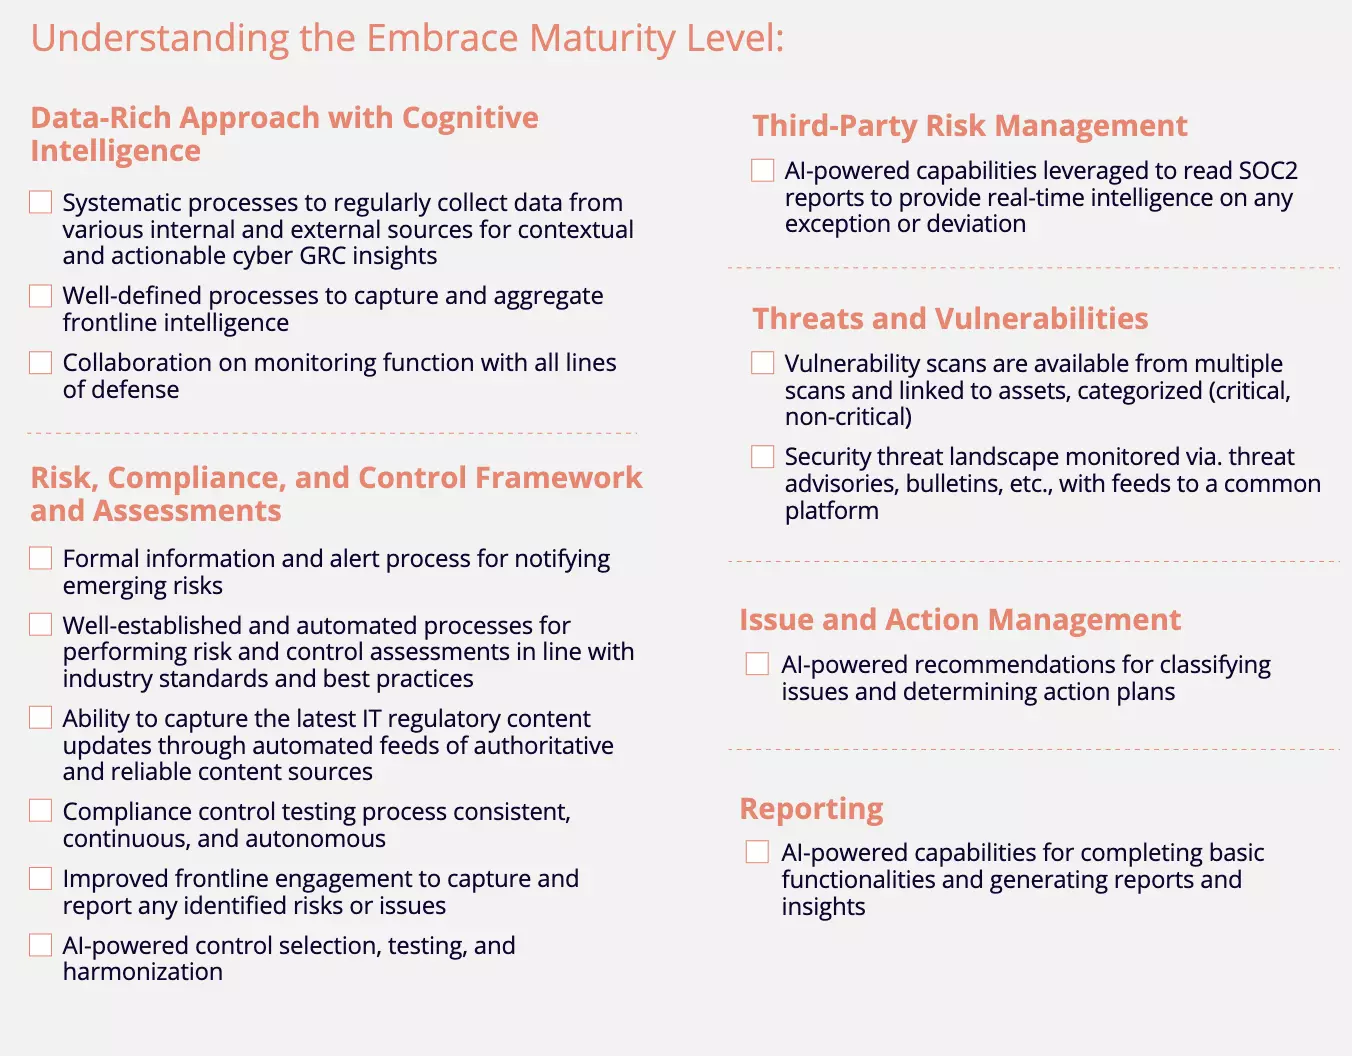 Understanding the Embrace Maturity Level: